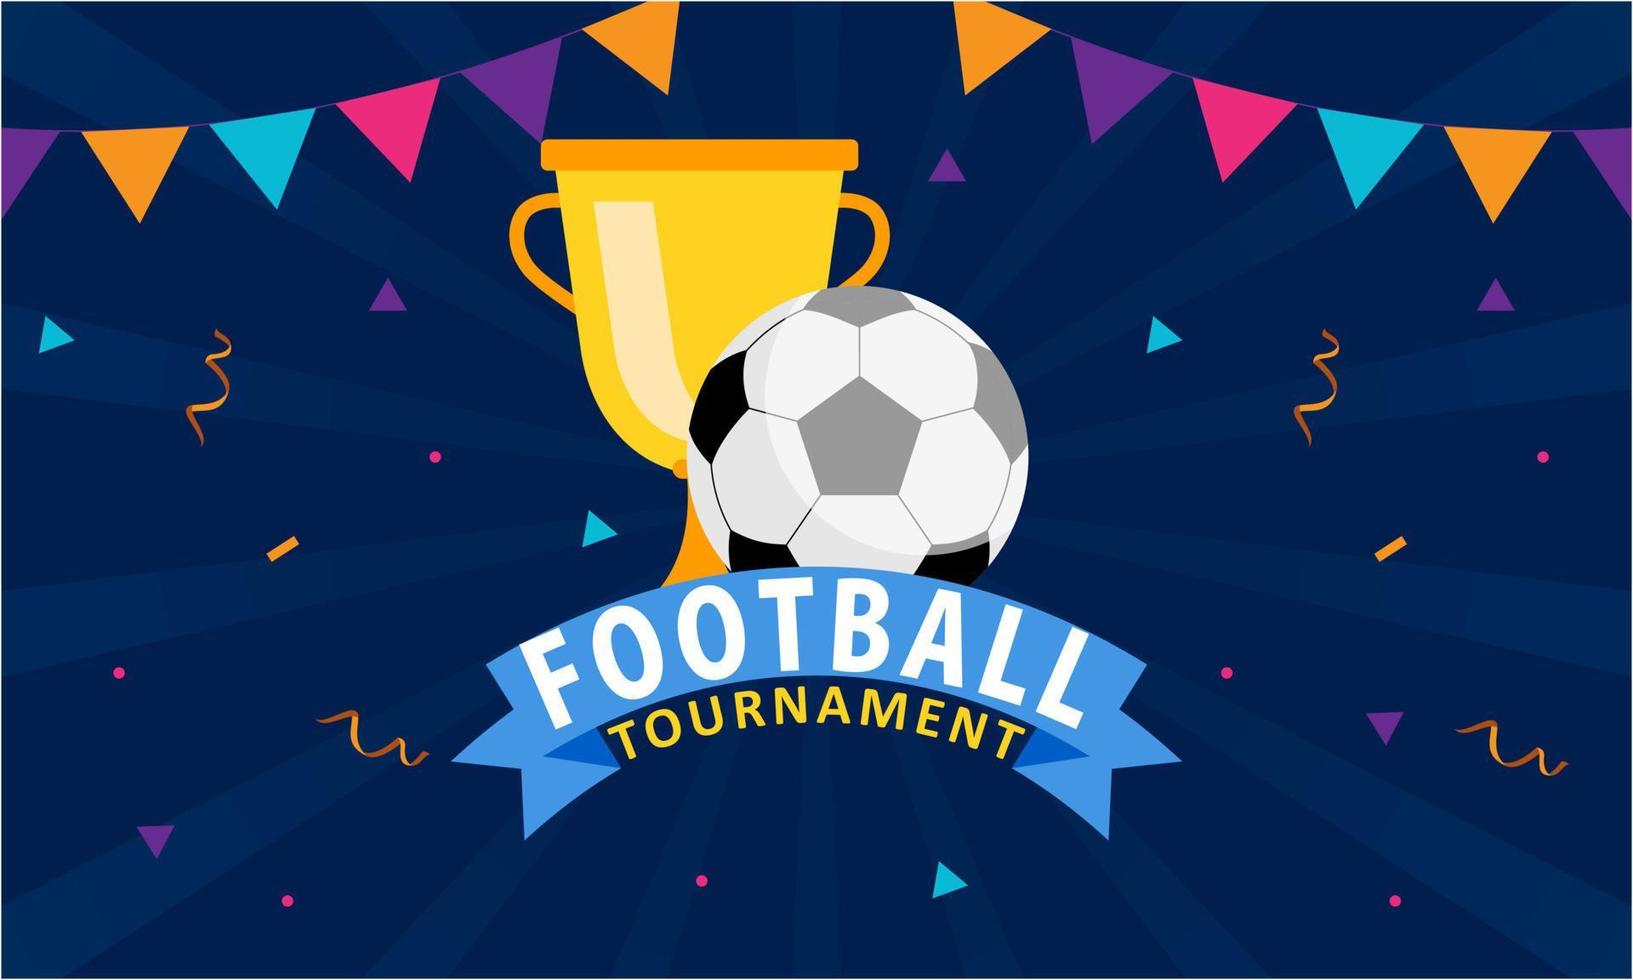 Football tournament illustration vector